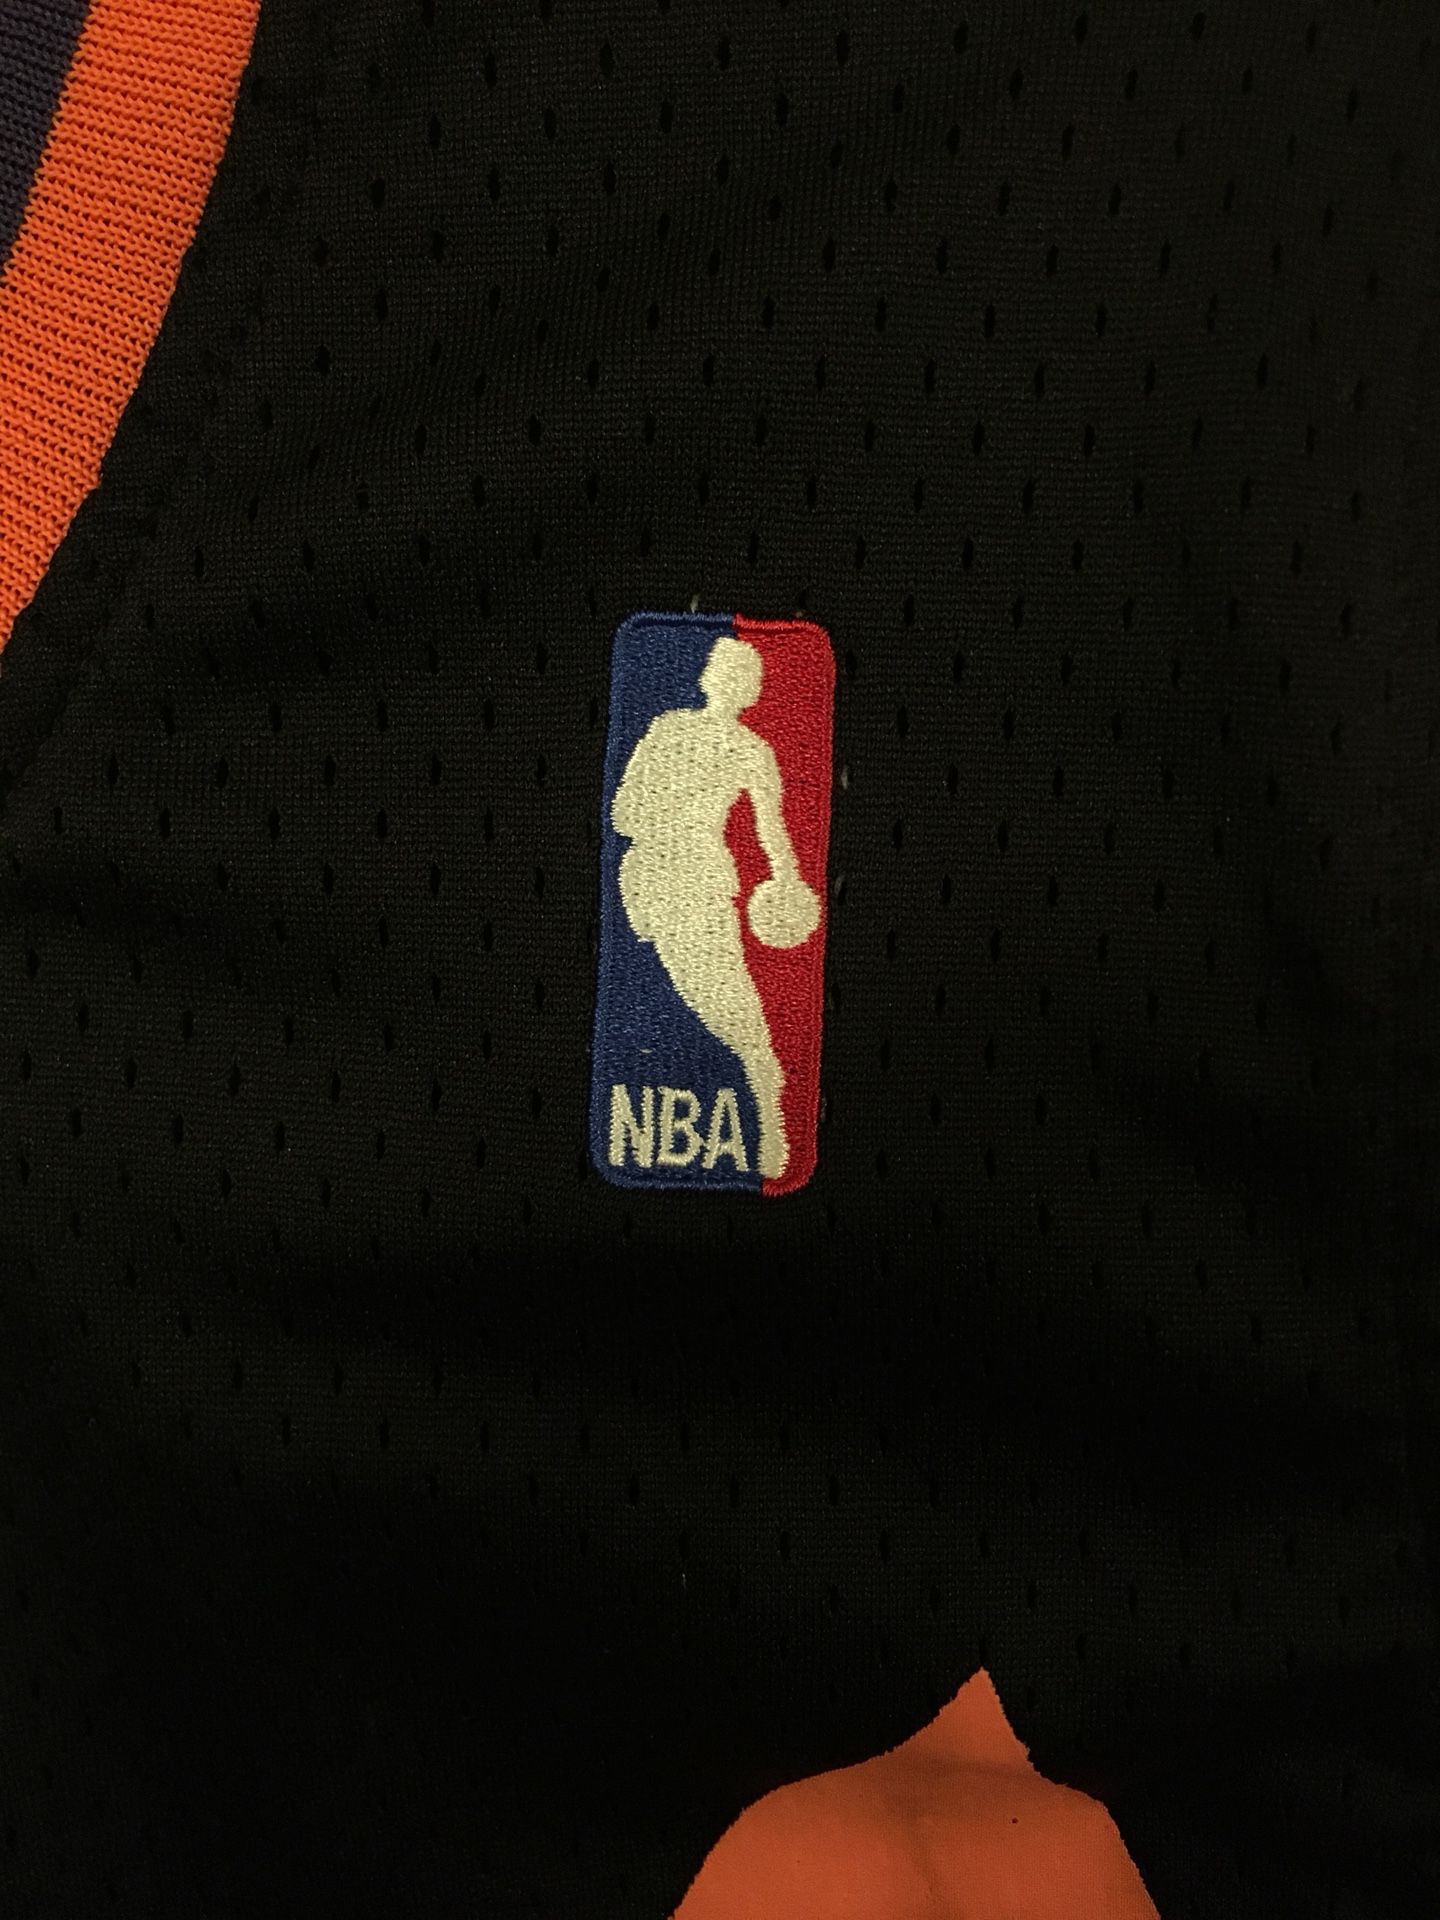 1990s Charles Barkley Phoenix Suns NBA Basketball Jersey – WyCo